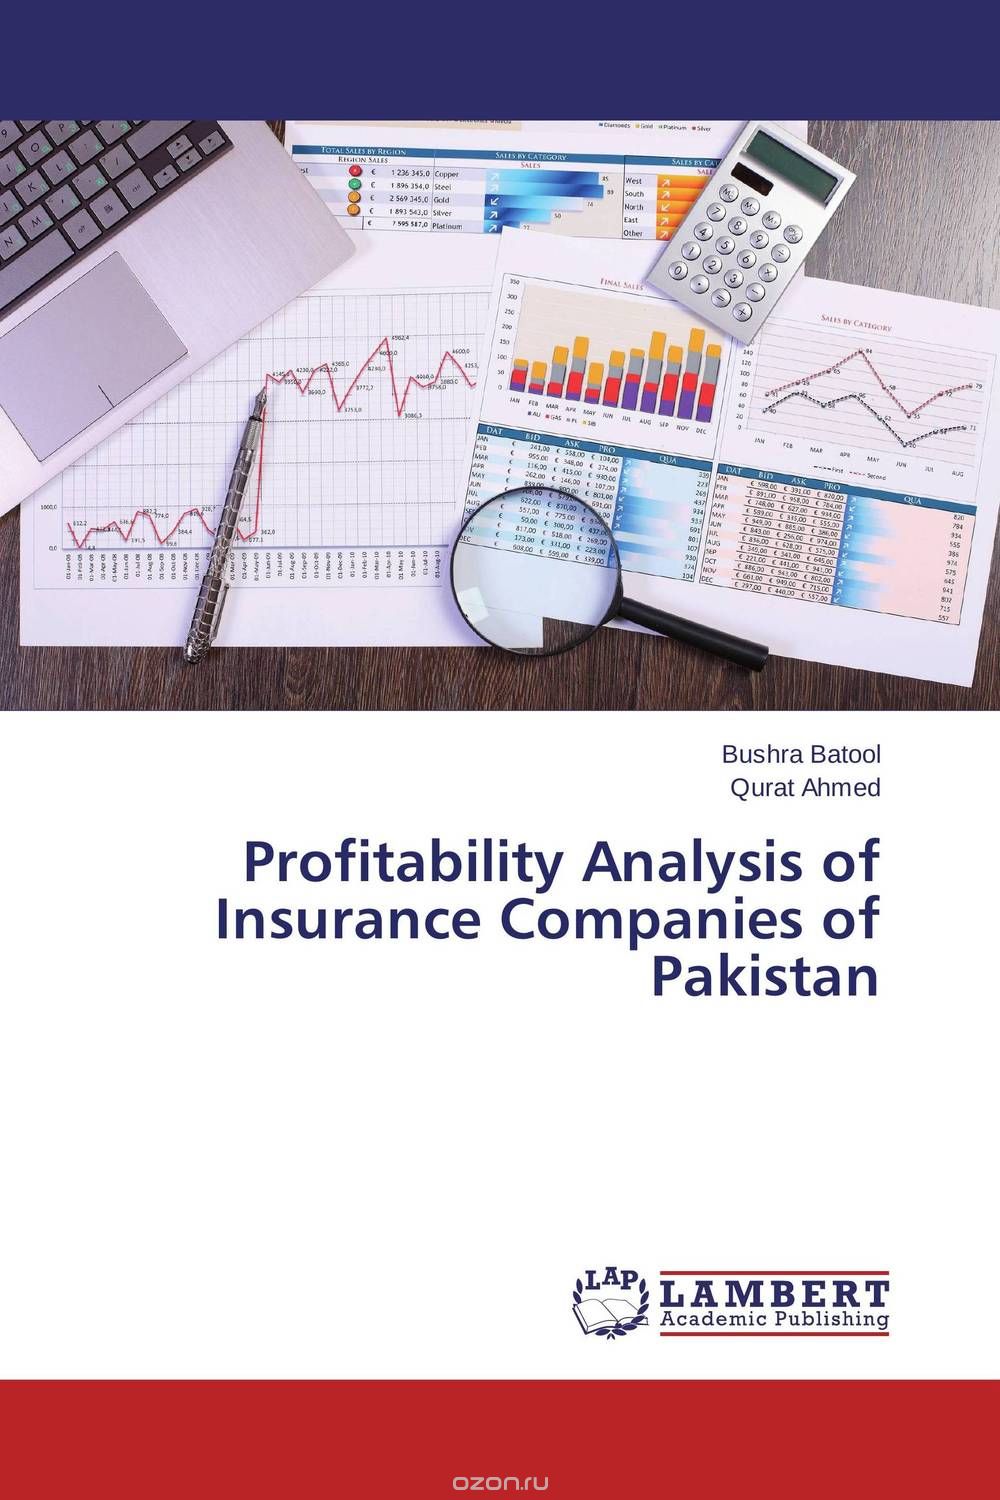 Скачать книгу "Profitability Analysis of Insurance Companies of Pakistan"